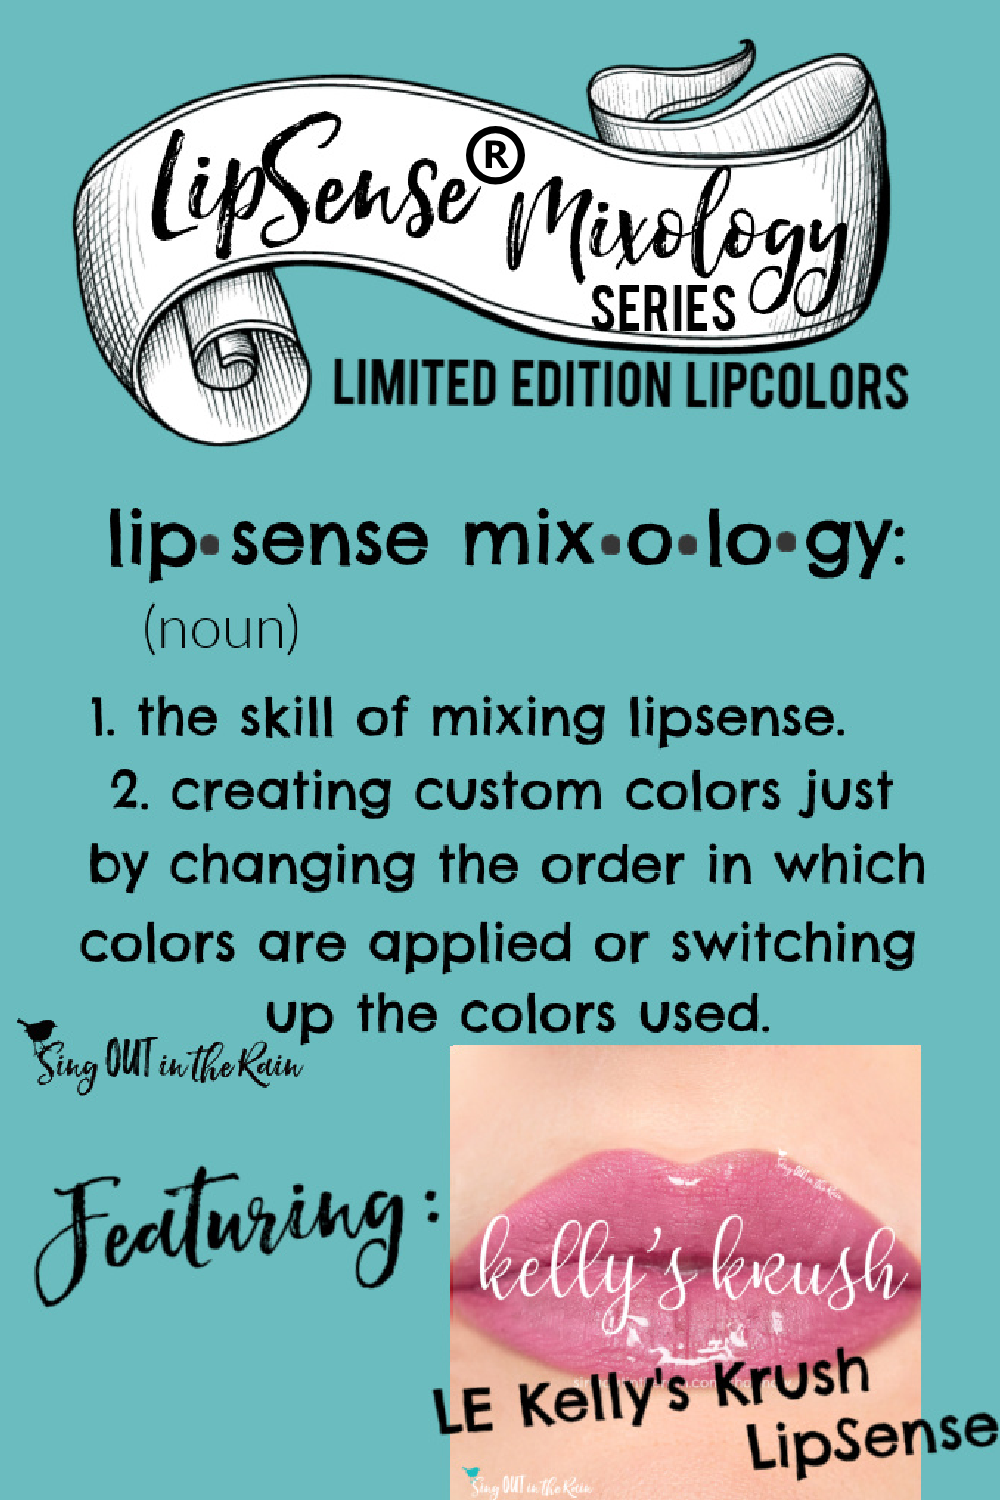 The Ultimate Guide to Kellys Krush LipSense Mixology